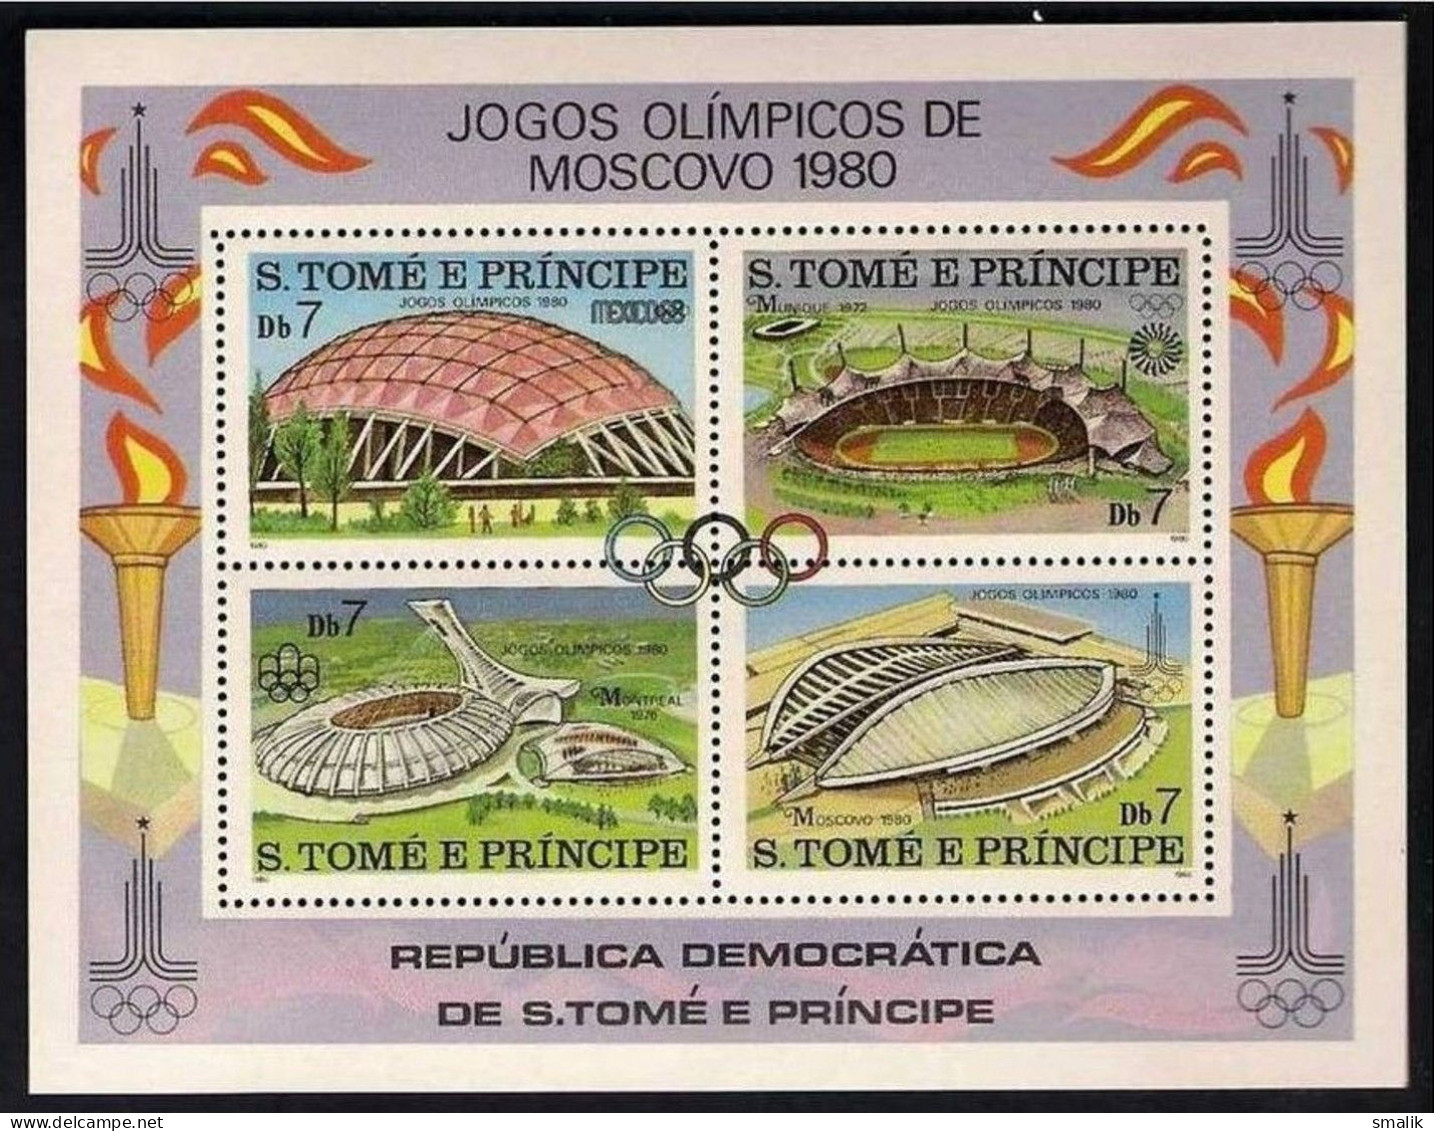 S. TOME E PRINCIPE SAO 1980 - Moscow Olympic Games, Stadium, Miniature Sheet MNH - Sao Tome Et Principe